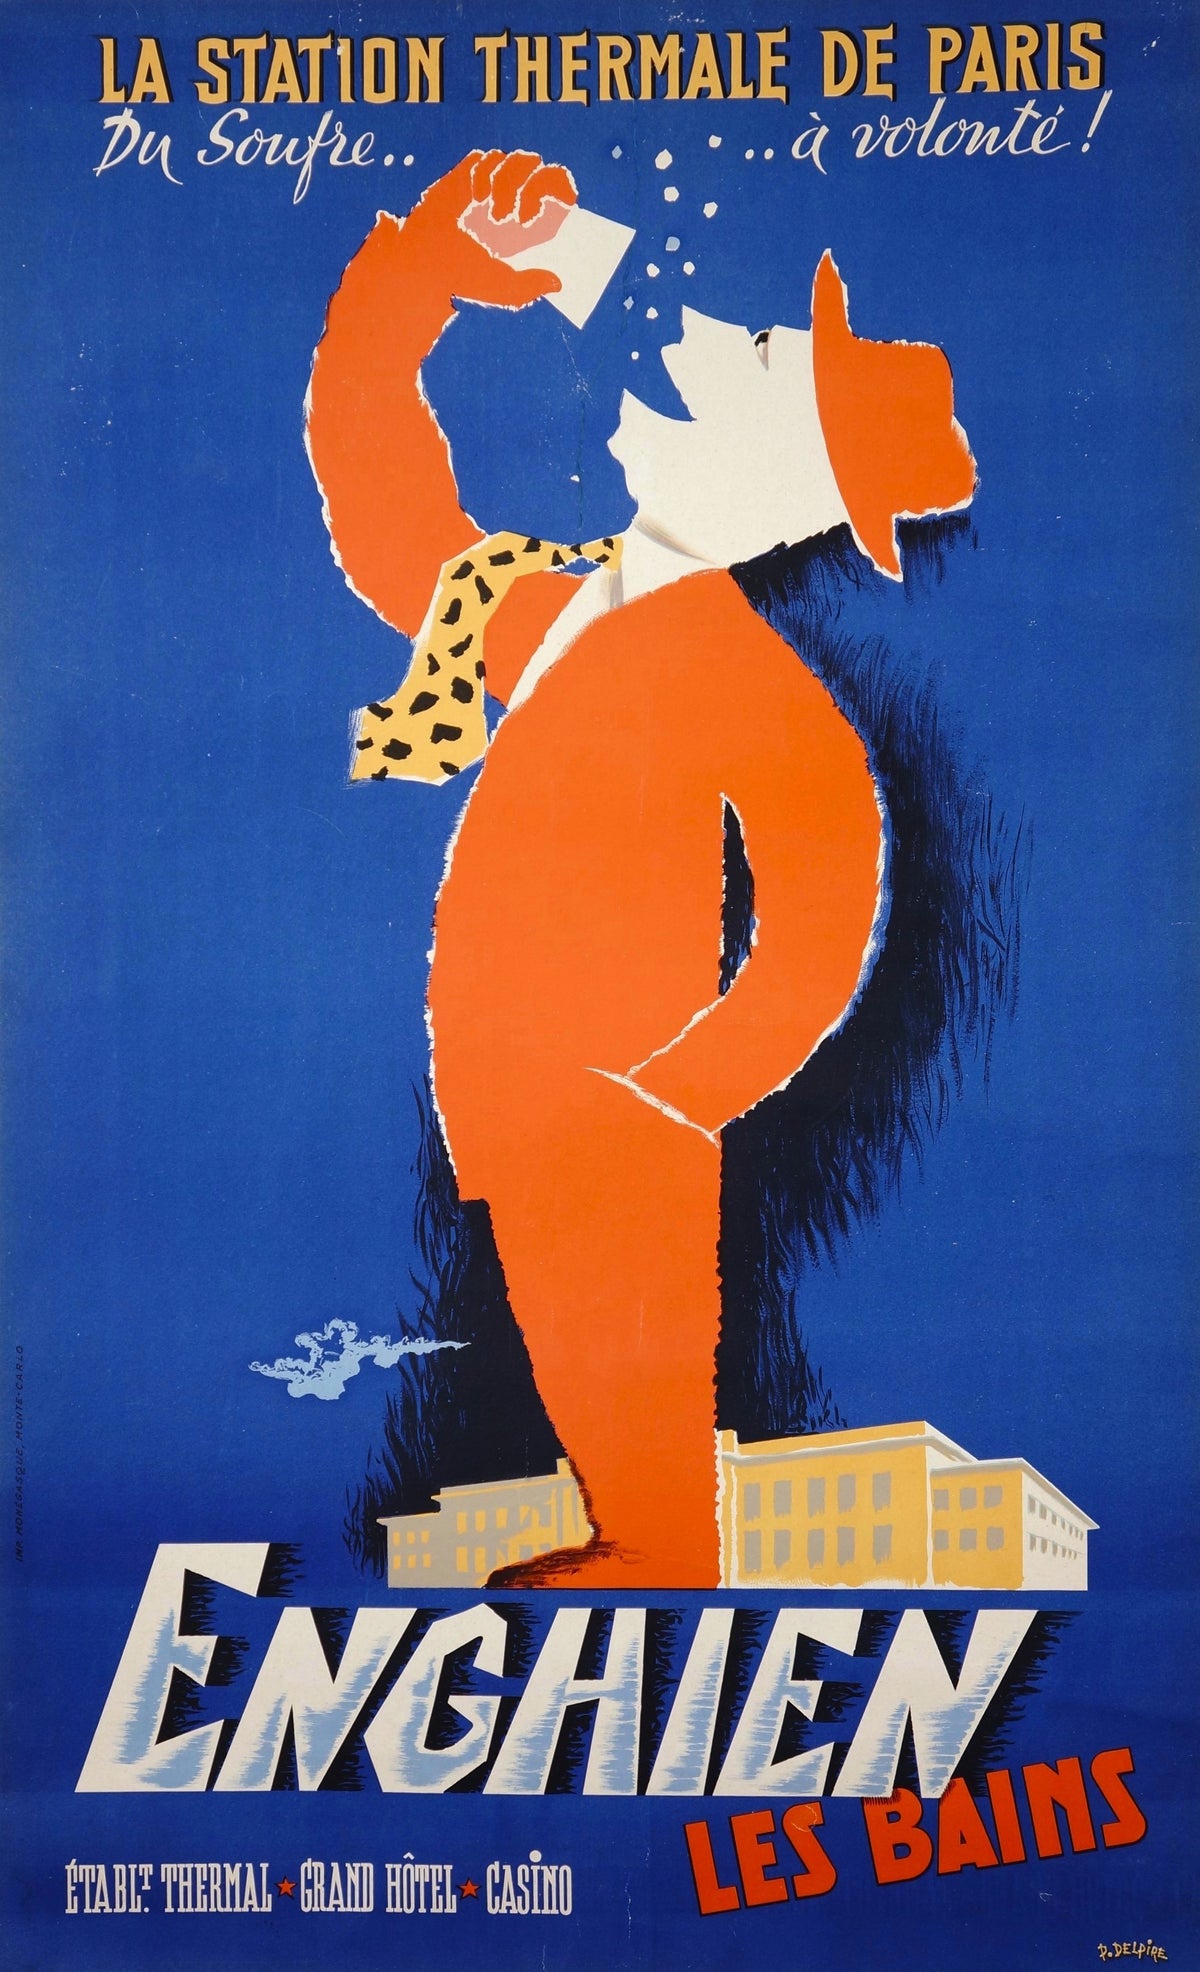 Enghien Thermal Spas - Authentic Vintage Poster